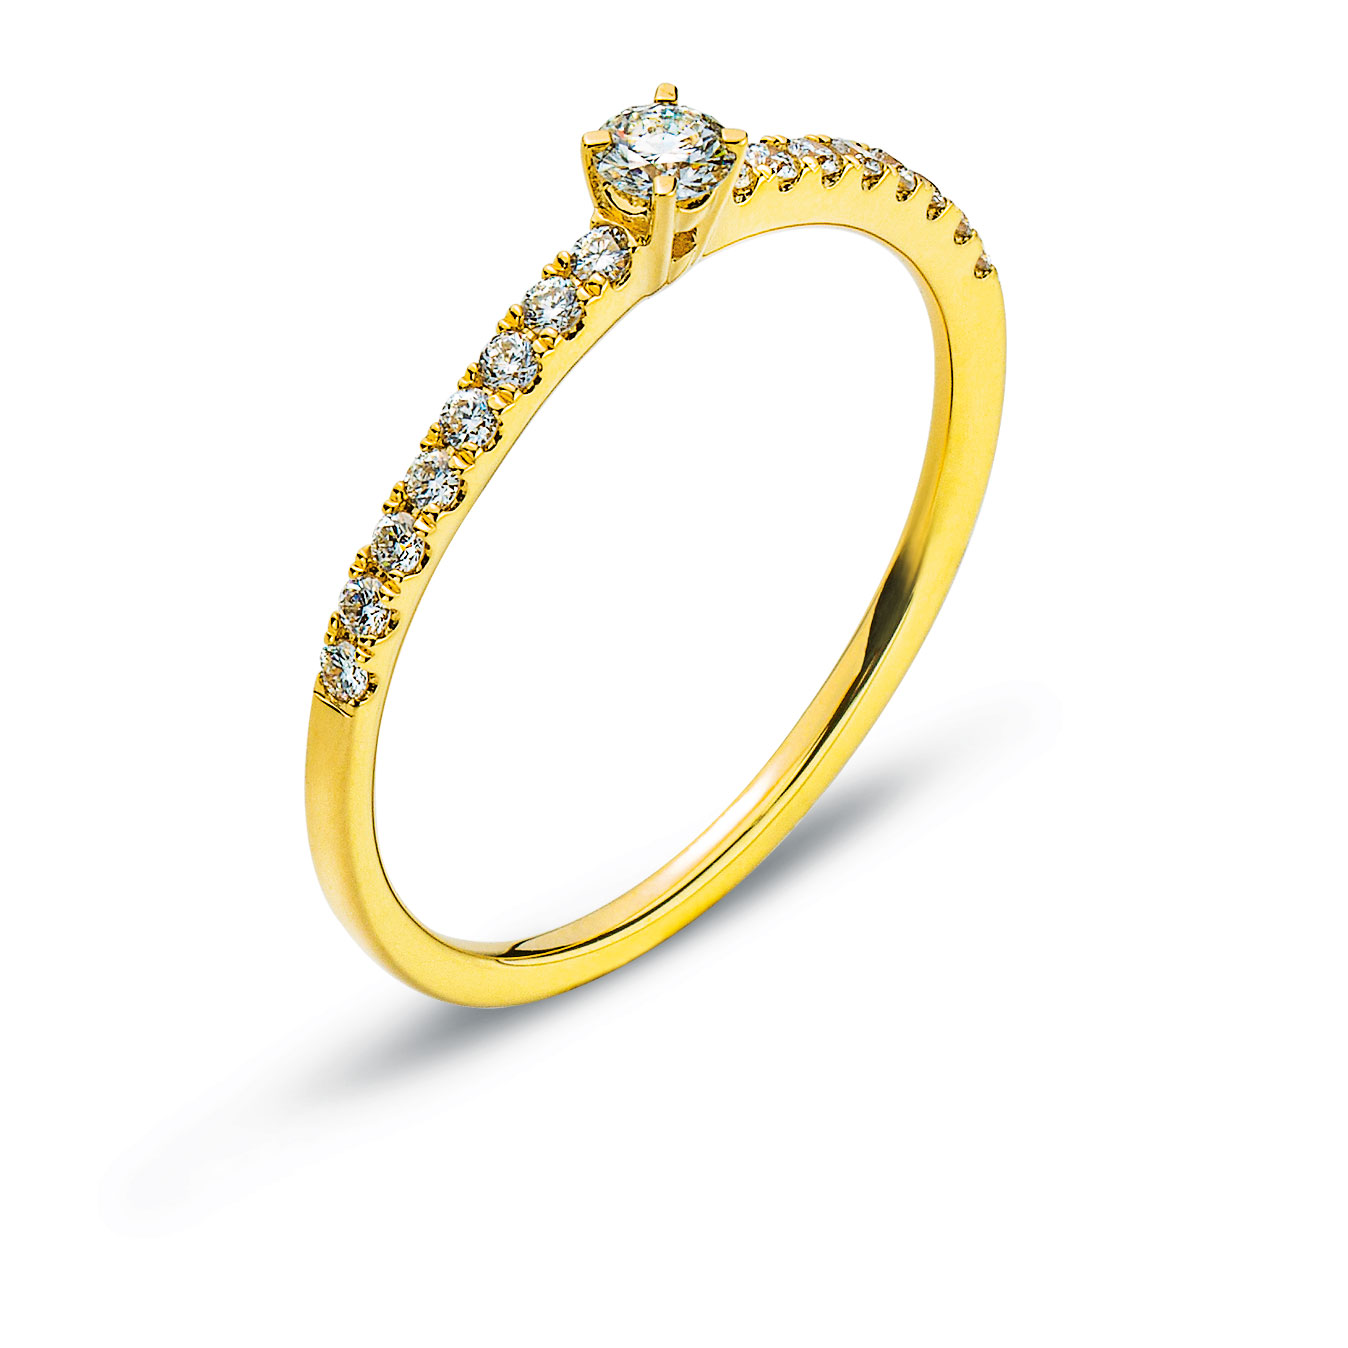 AURONOS Prestige Or jaune 18K diamants 0.25ct